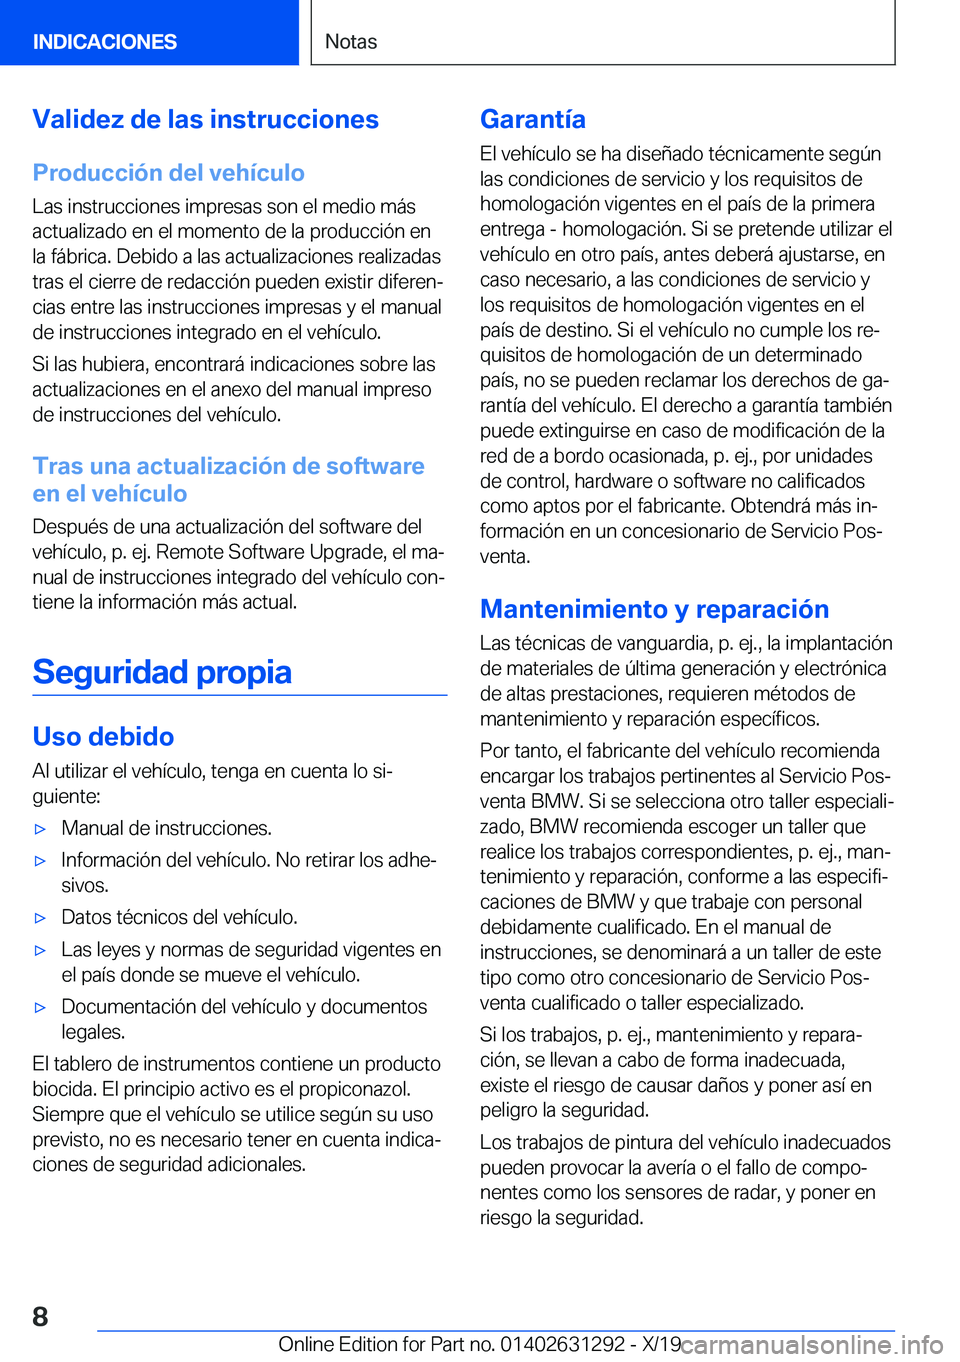 BMW M8 2020  Manuales de Empleo (in Spanish) �V�a�l�i�d�e�z��d�e��l�a�s��i�n�s�t�r�u�c�c�i�o�n�e�s�P�r�o�d�u�c�c�i�